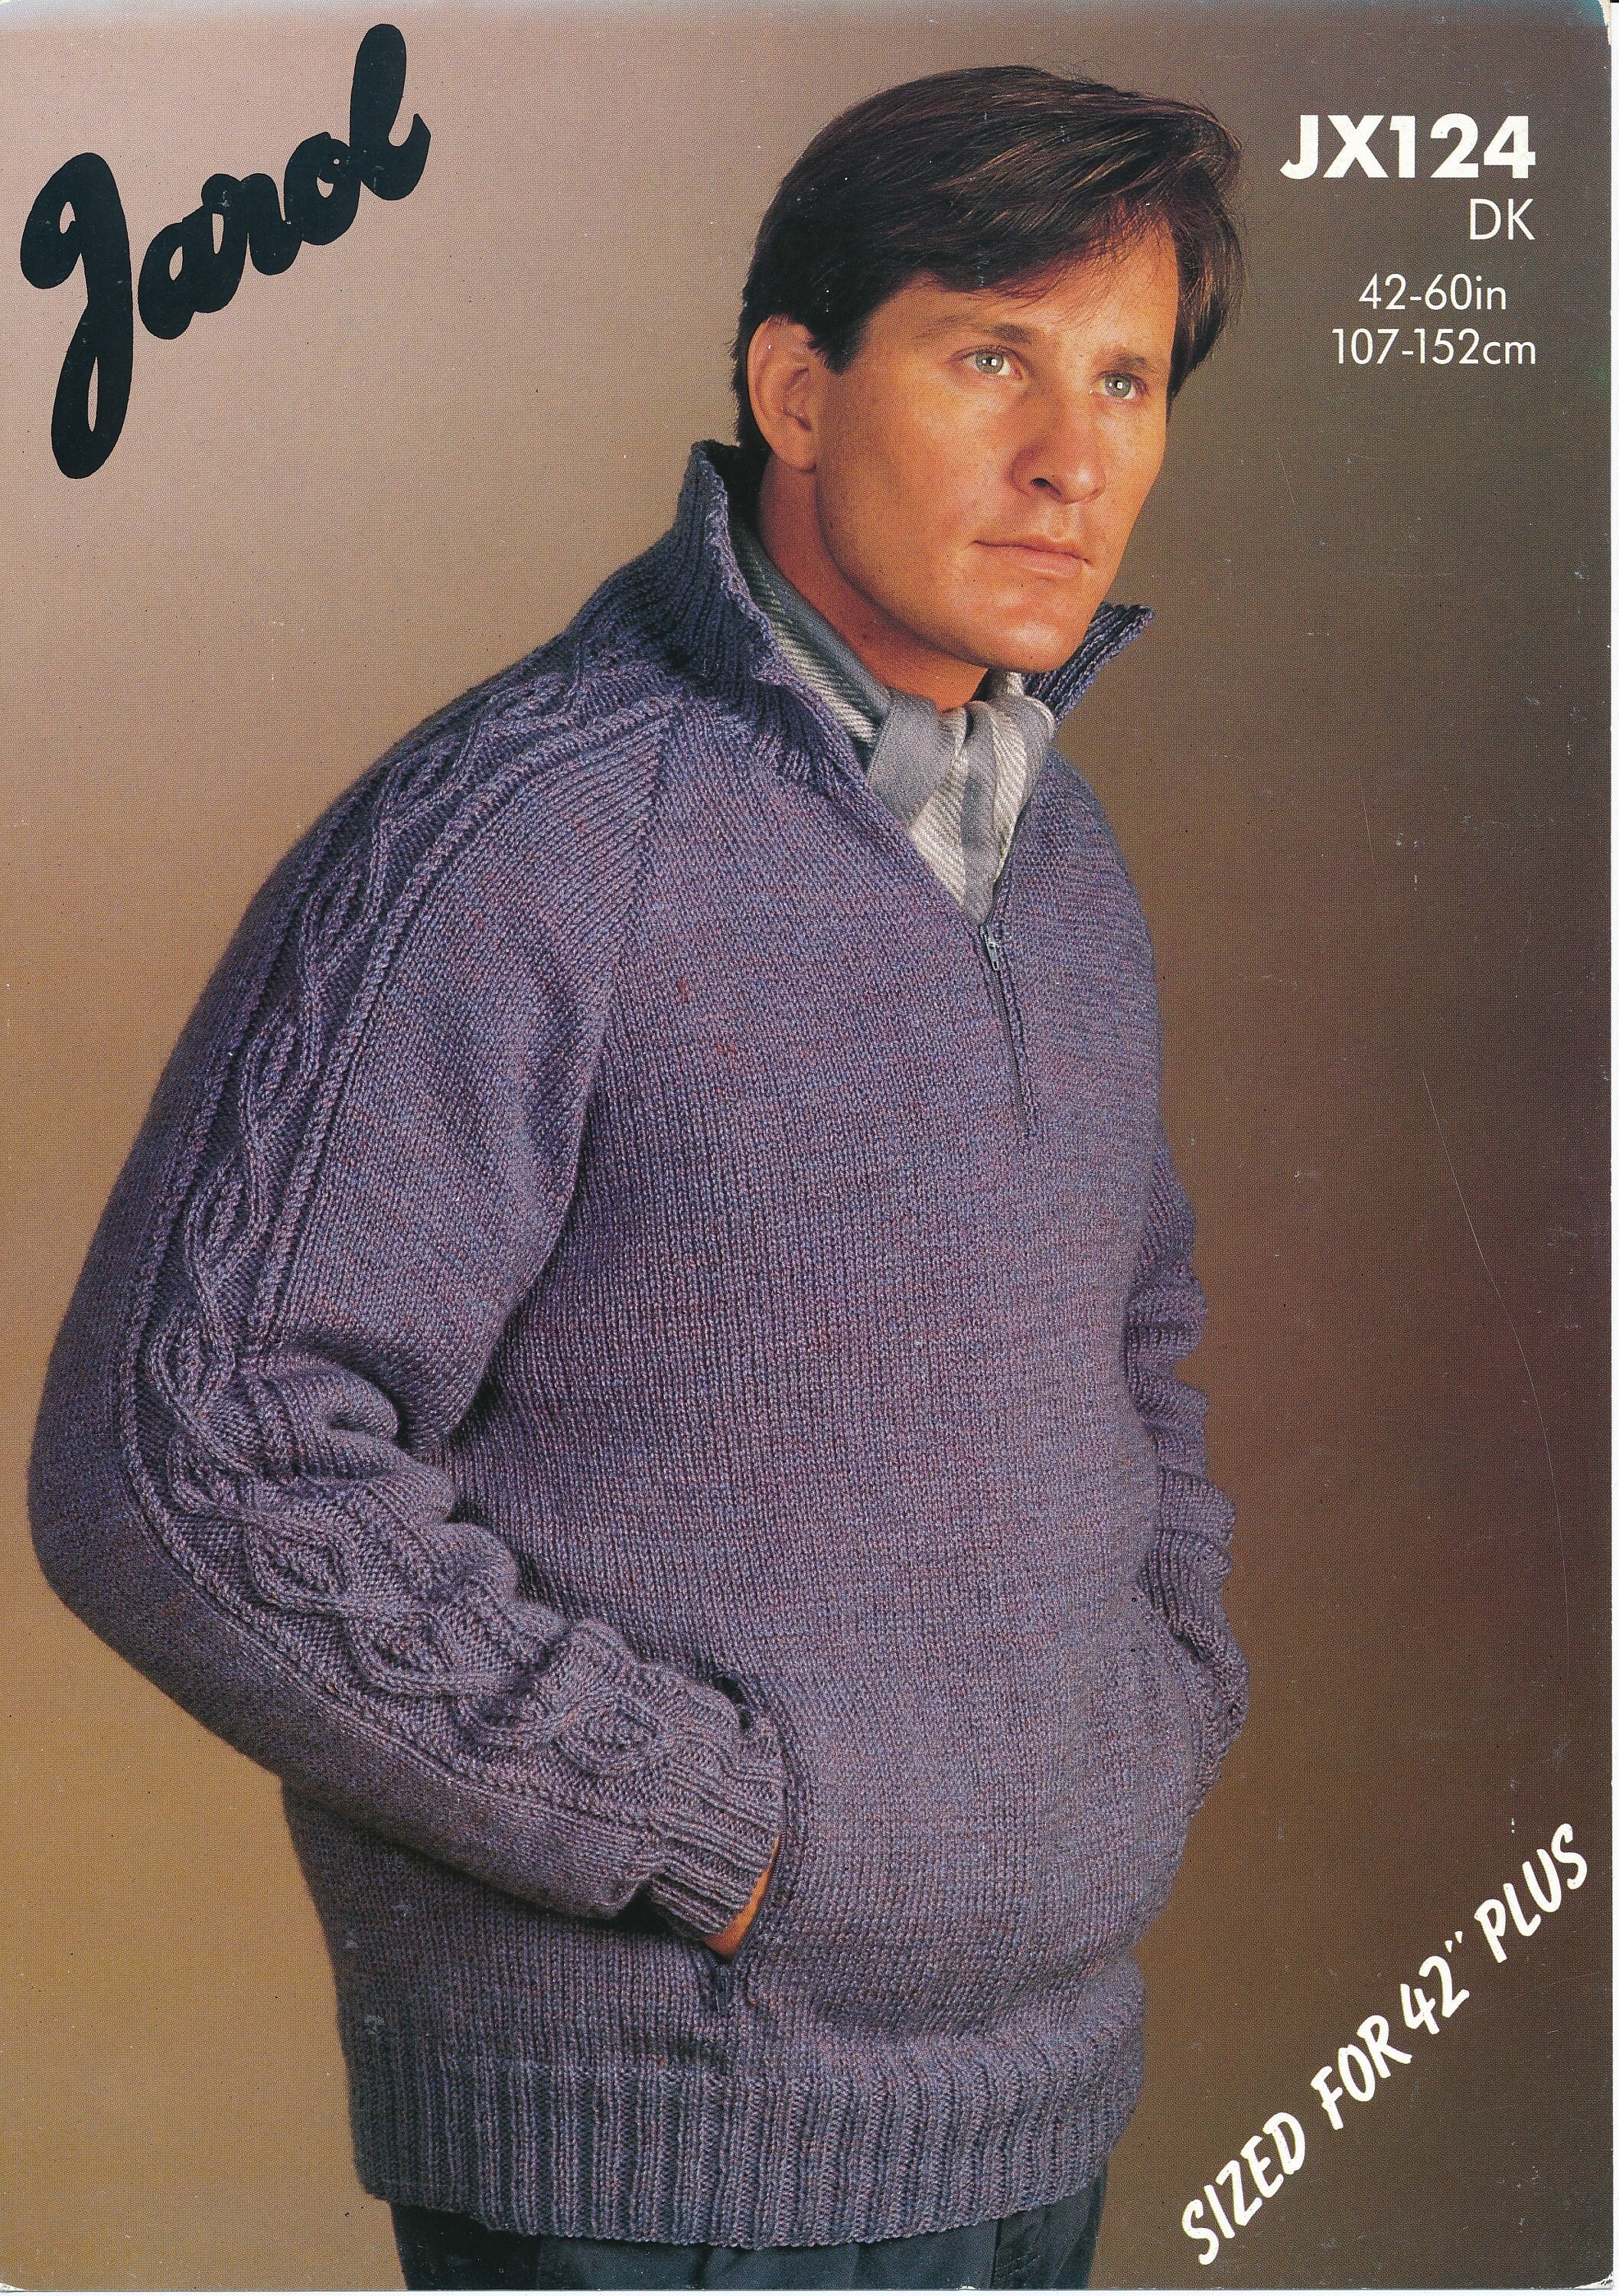 Stort univers Junior uendelig Mens oversized sweater knitting pattern, Mens 90s extra large plus size DK  sweater jumper pattern - 42 - 60 chest - Jarol 124